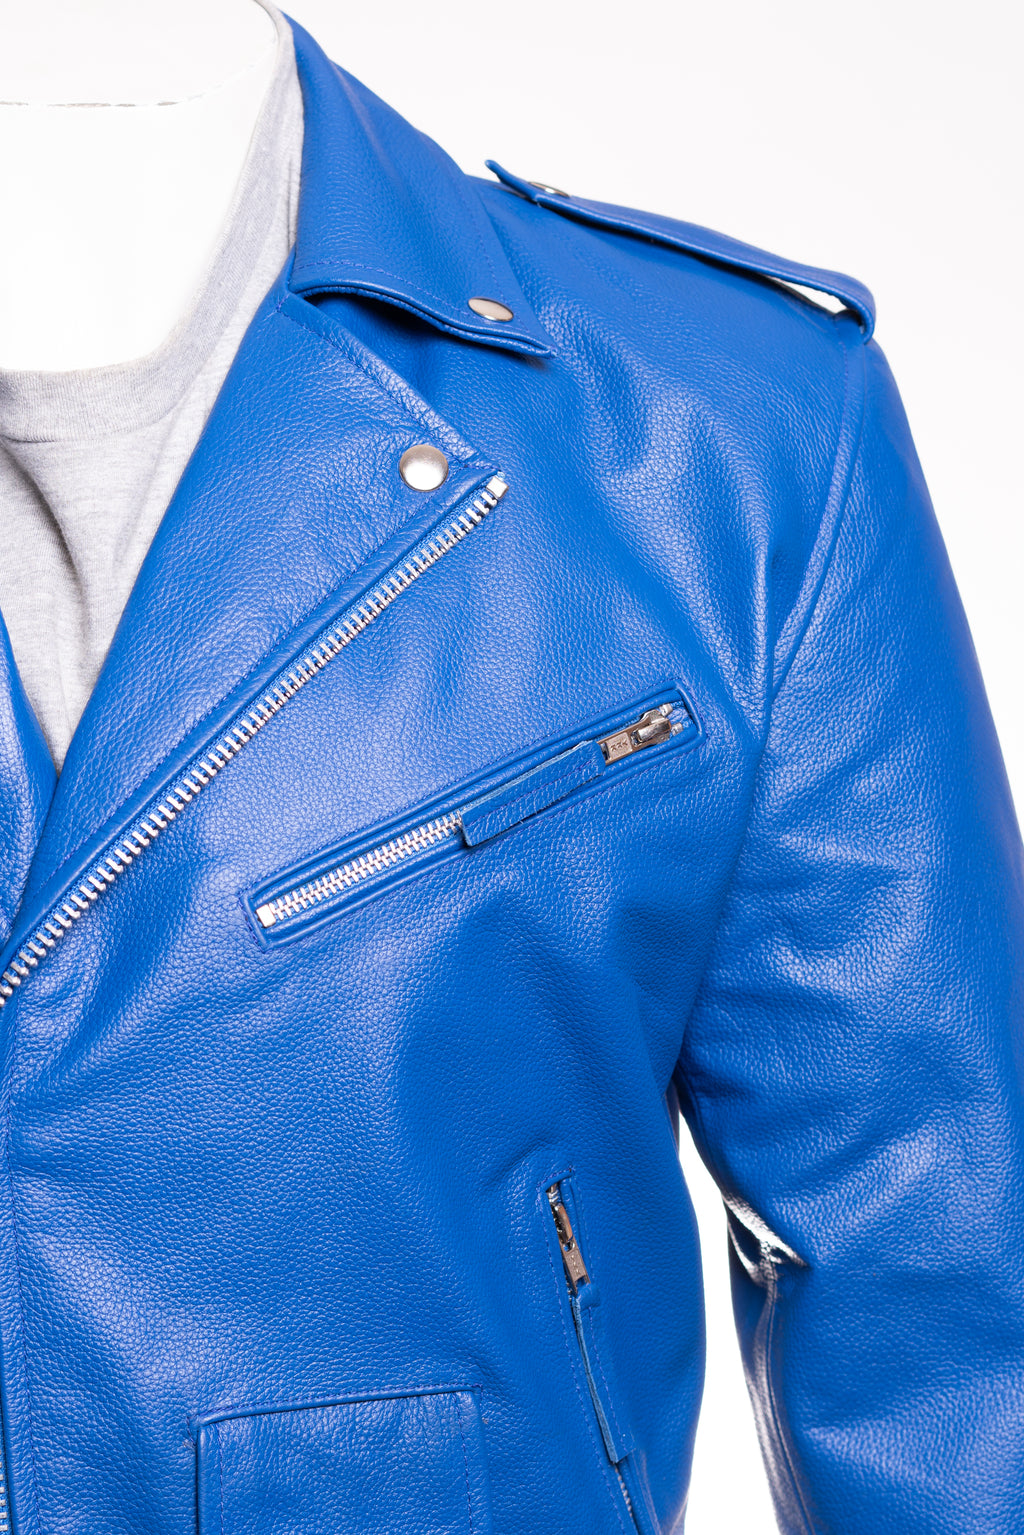 Men's Royal Blue Classic Brando Biker Style Cow Hide Leather Jacket: Jose